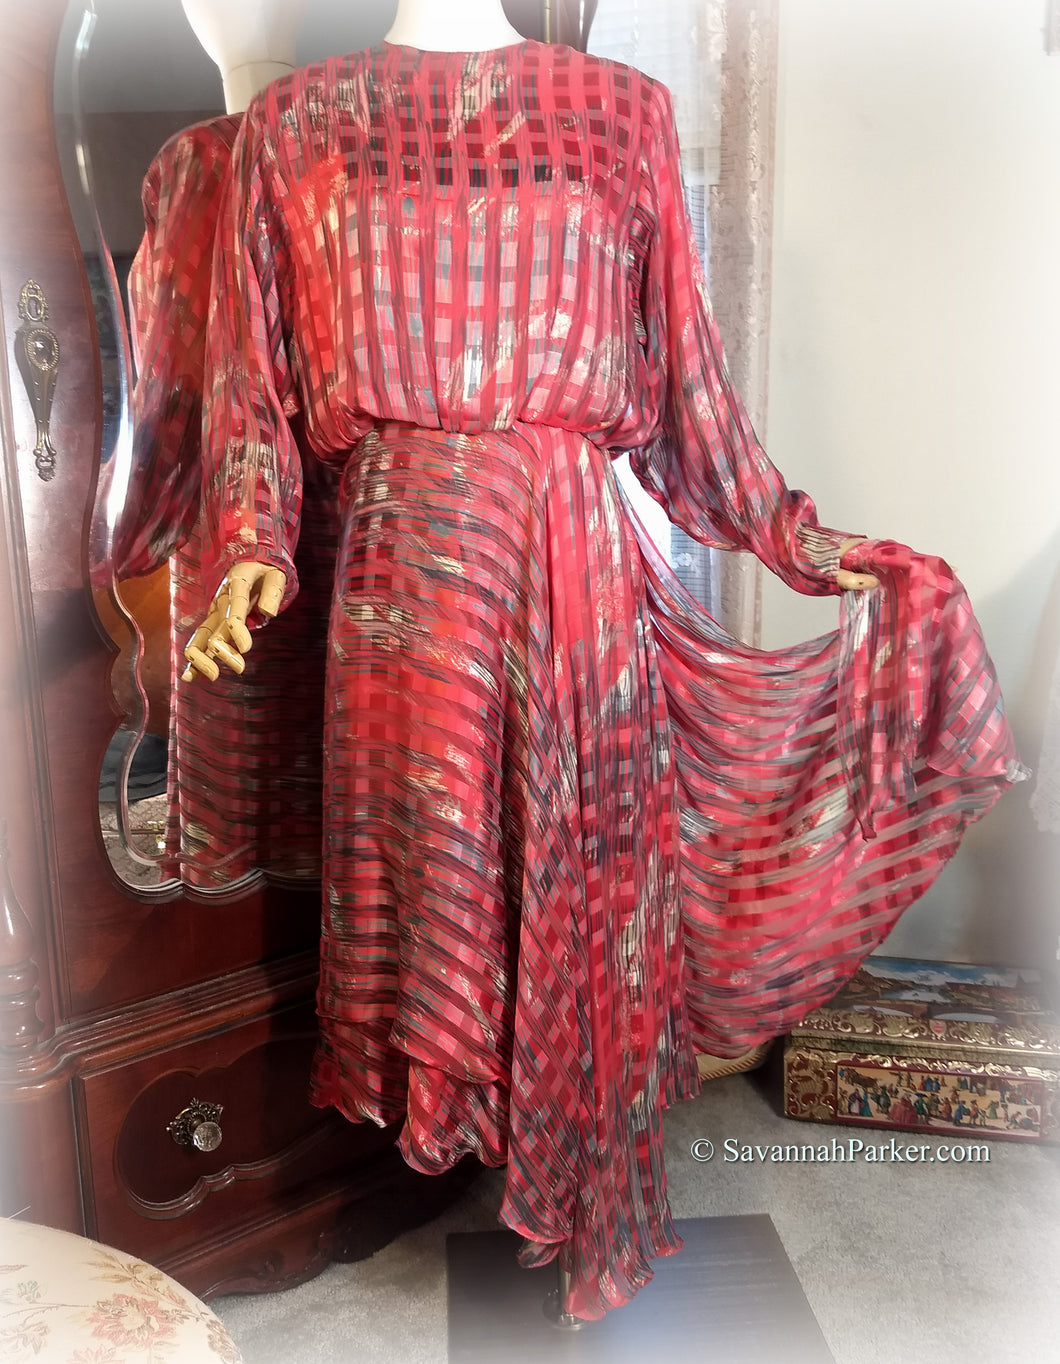 SOLD Vintage Coral Boho 70s 80s Draped Silk Chiffon Dress - Designed by Icinoo (The Silk Farm) Full Floaty Layered Skirt - Silk Satin Stripes